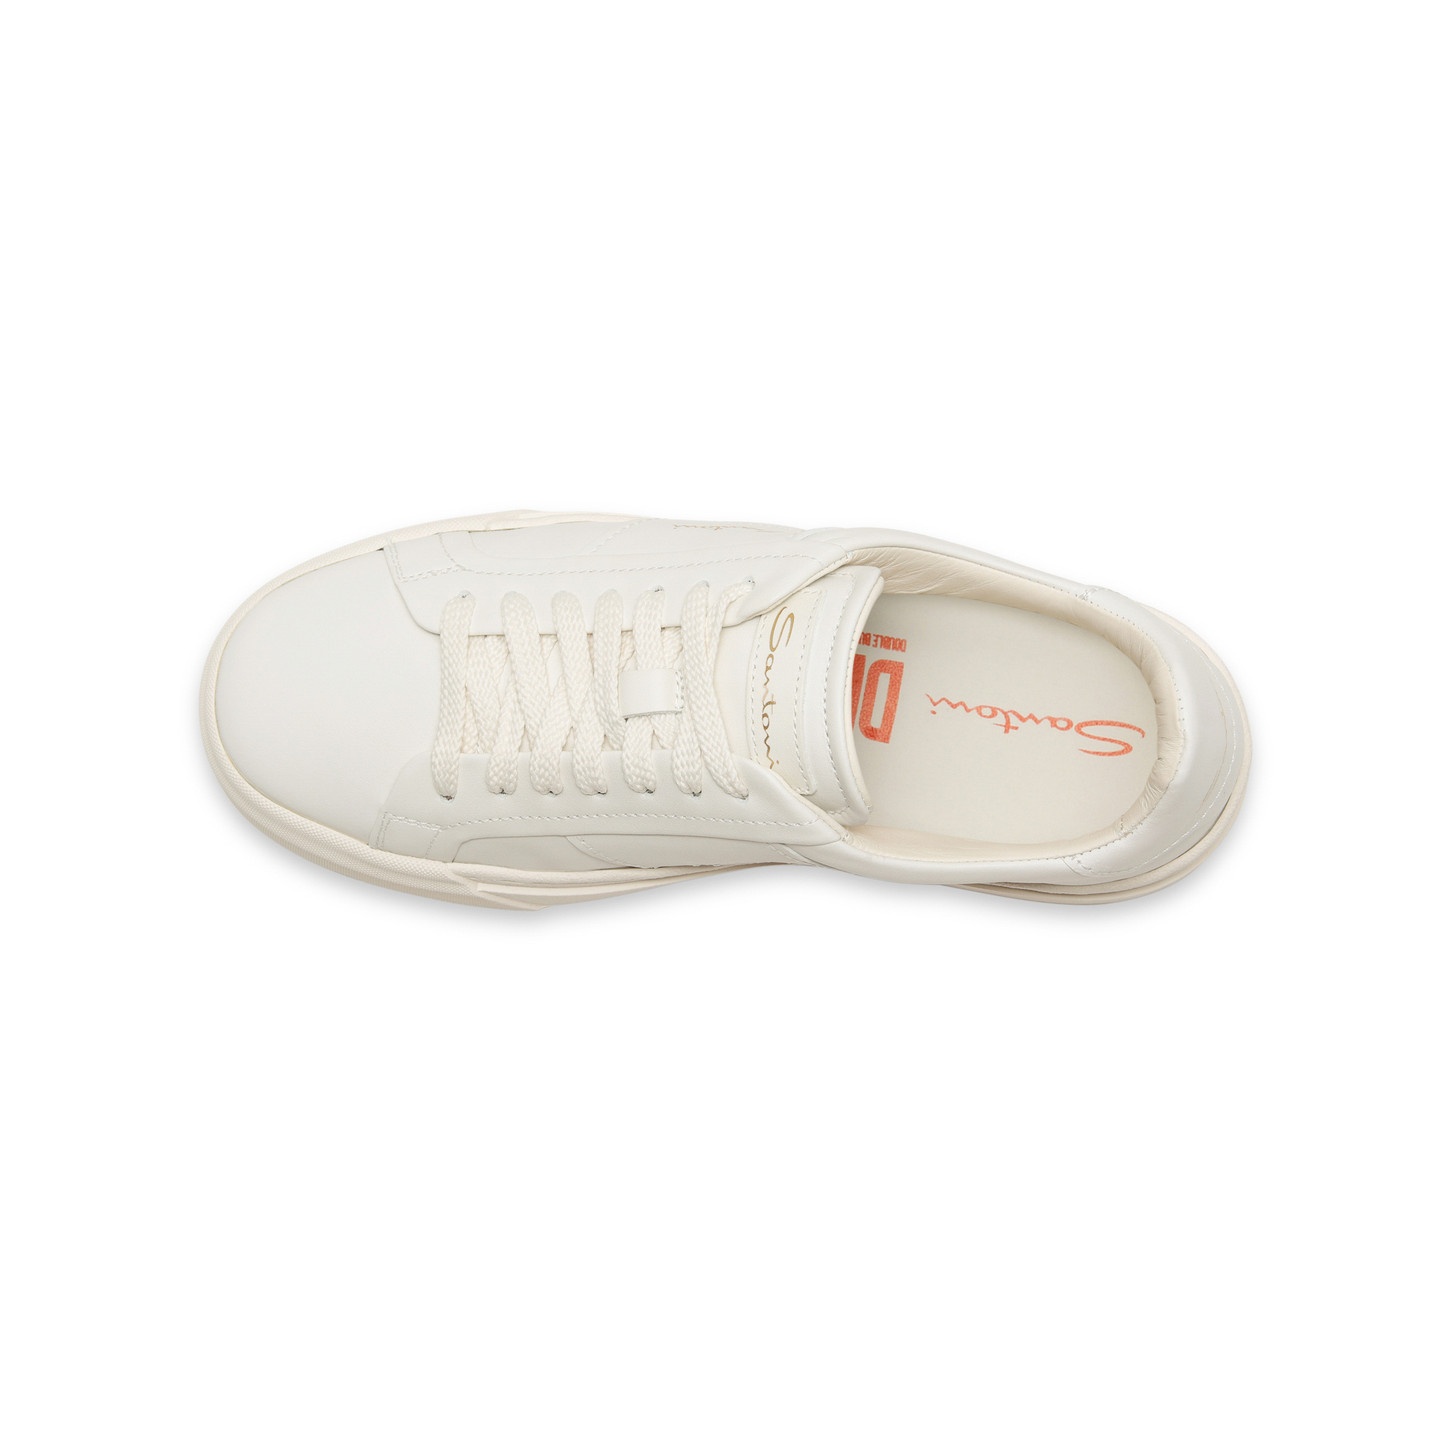 Women’s white leather double buckle sneaker - 5